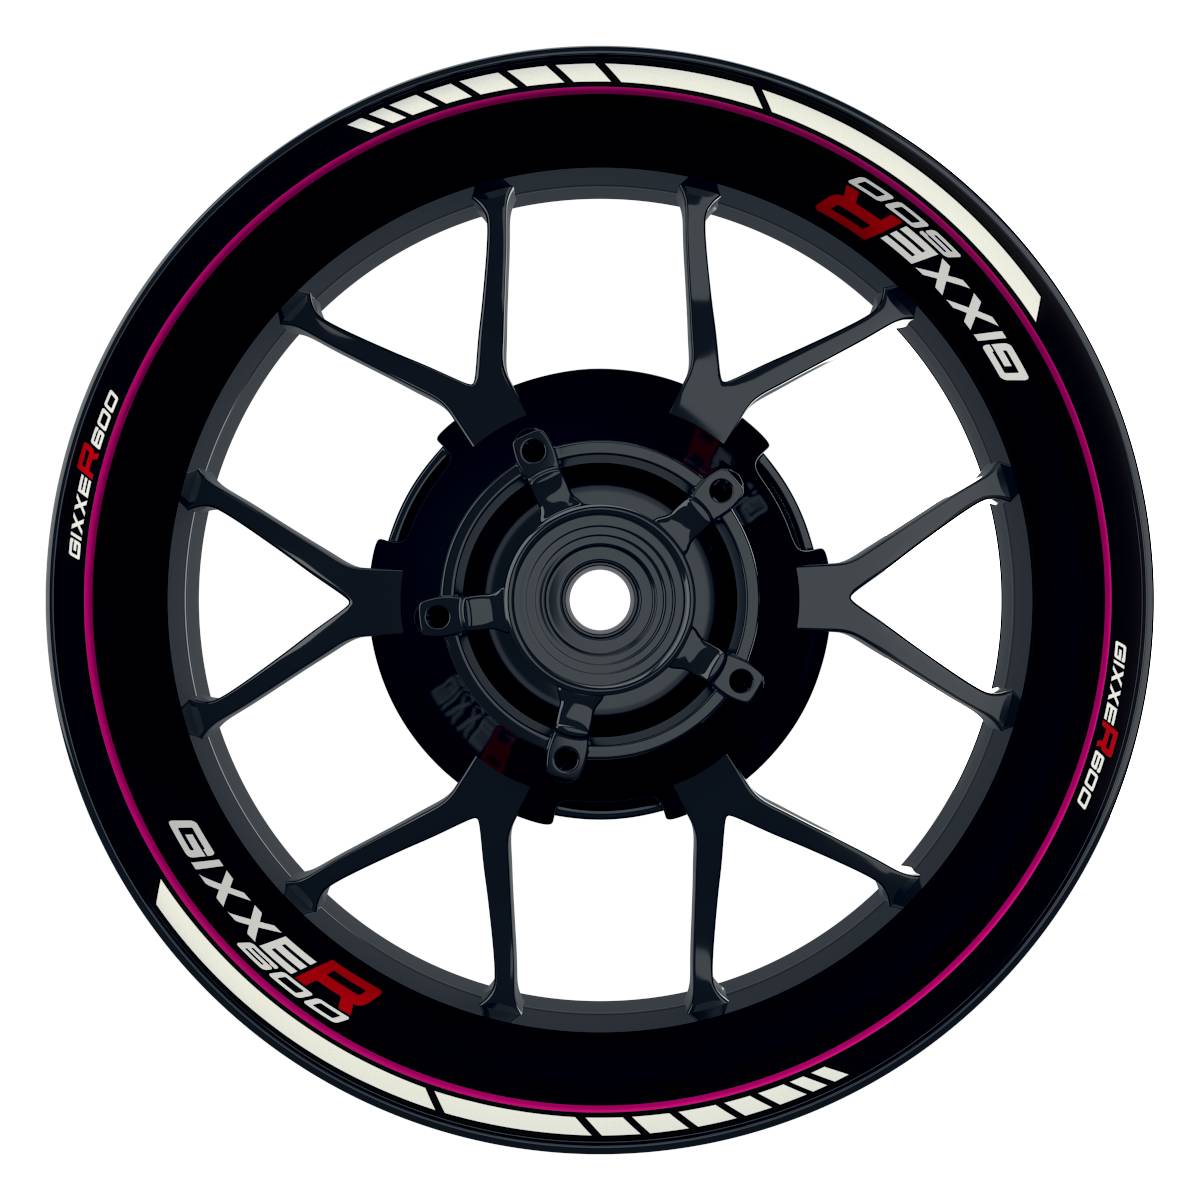 GIXXER600 Clean schwarz pink Wheelsticker Felgenaufkleber